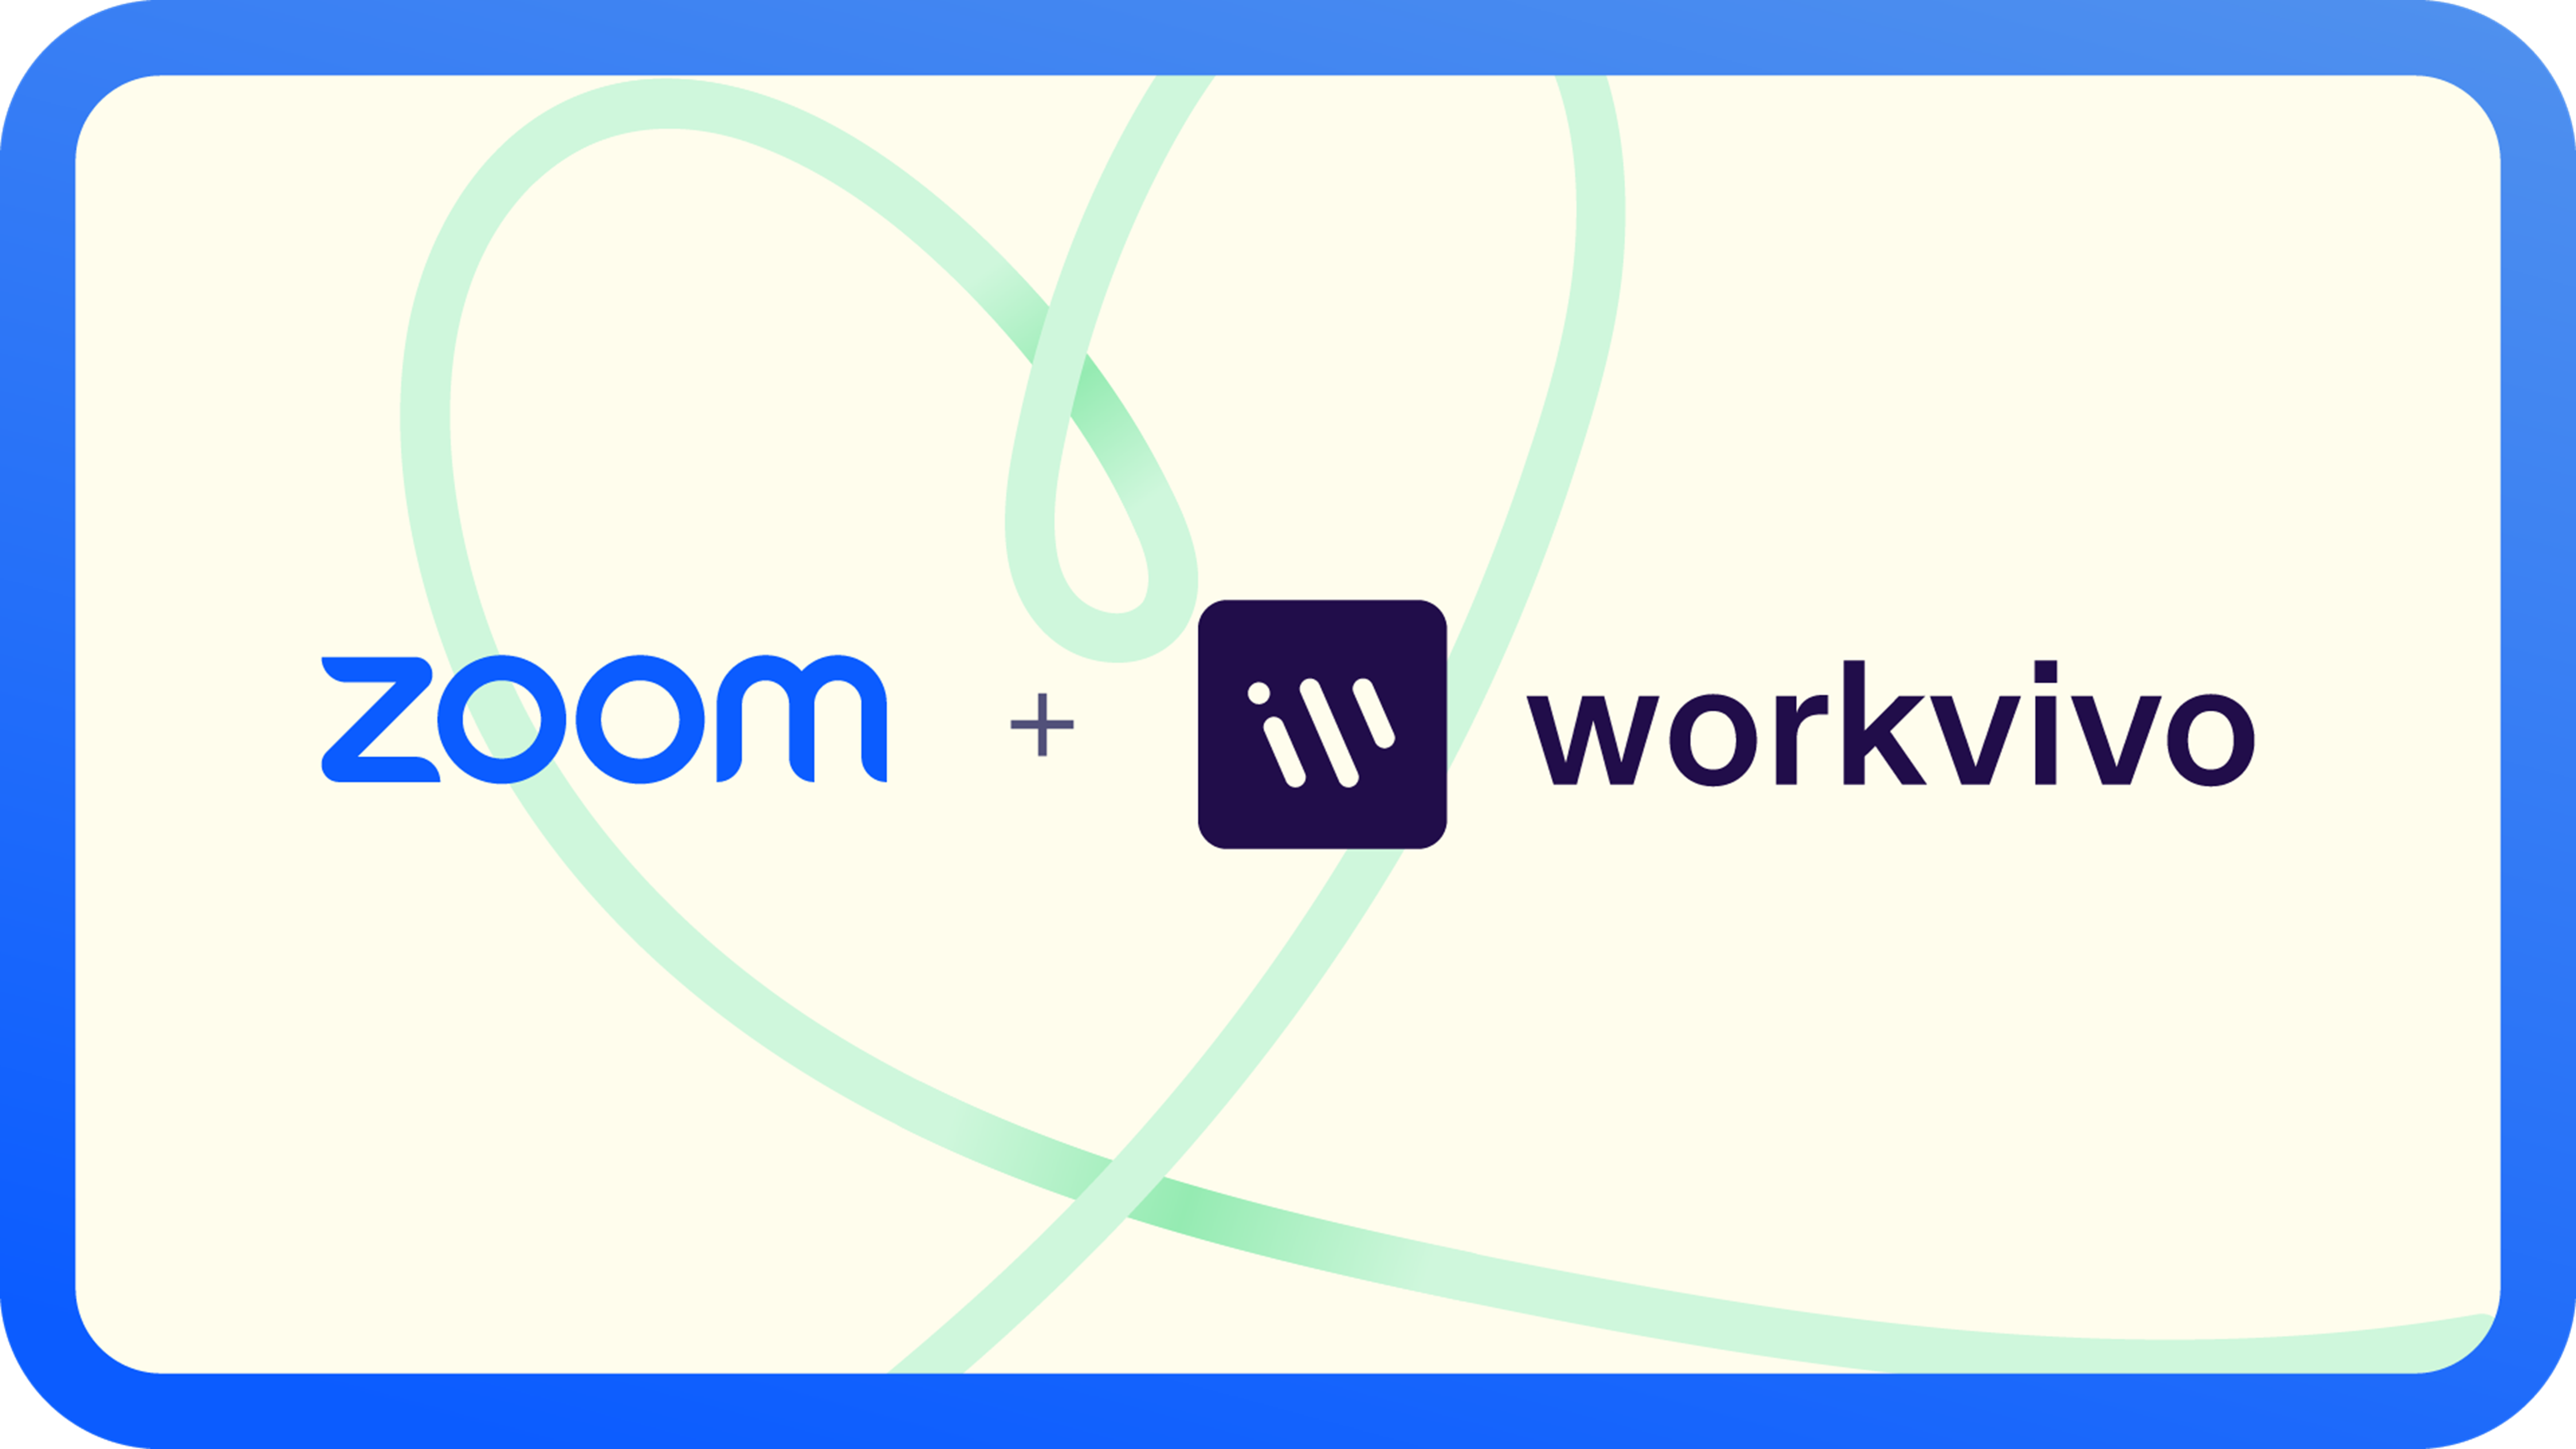 Zoom 收购 Workvivo 以增强员工体验